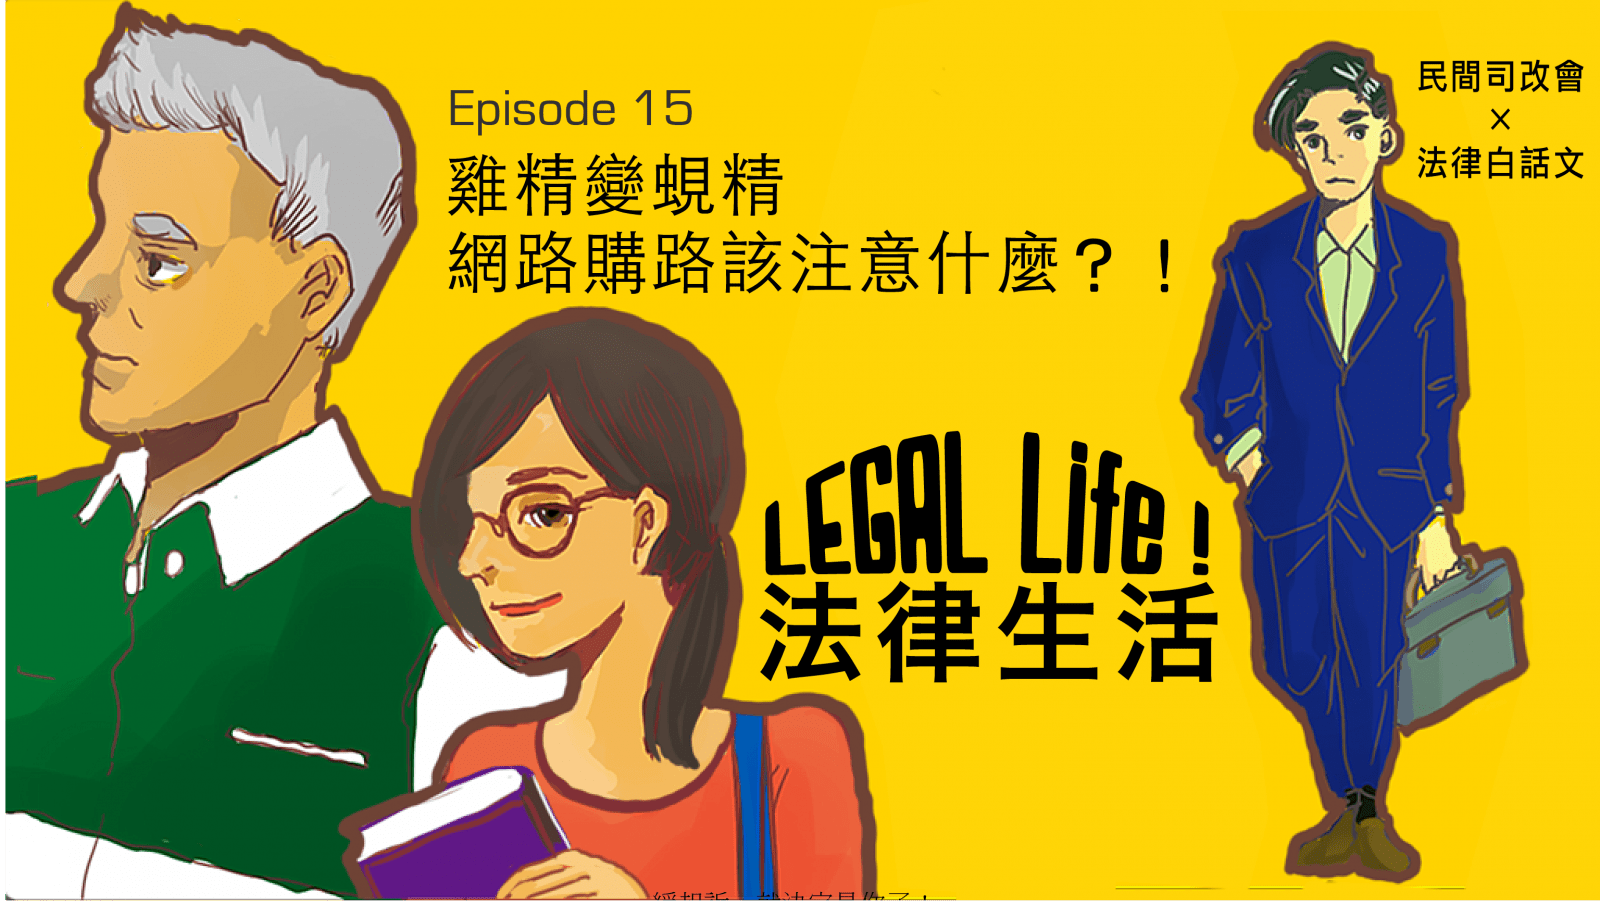 2016/09/legal-life15.png